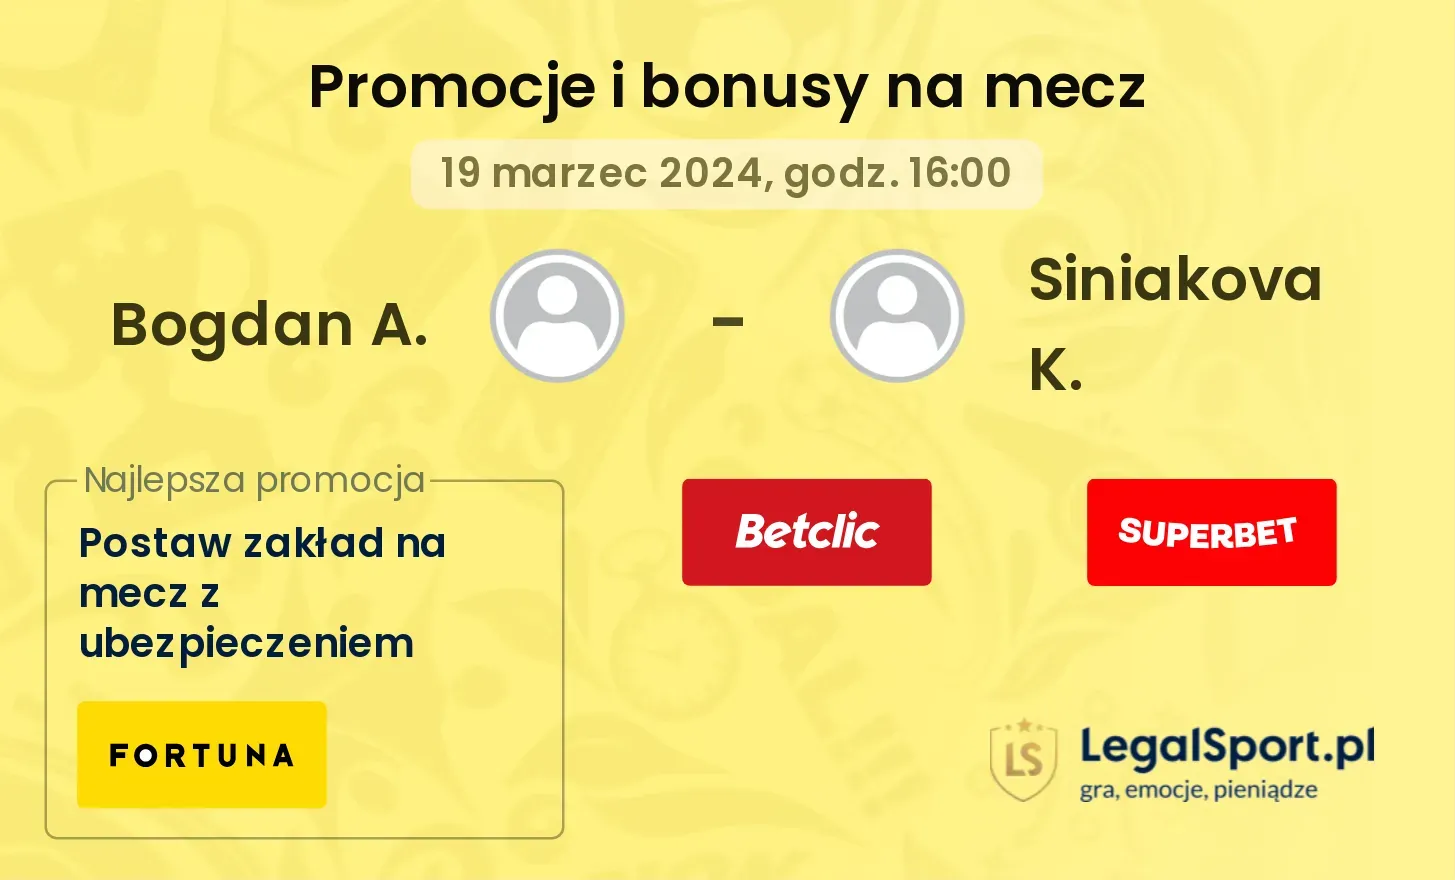 Bogdan A. - Siniakova K. promocje bonusy na mecz